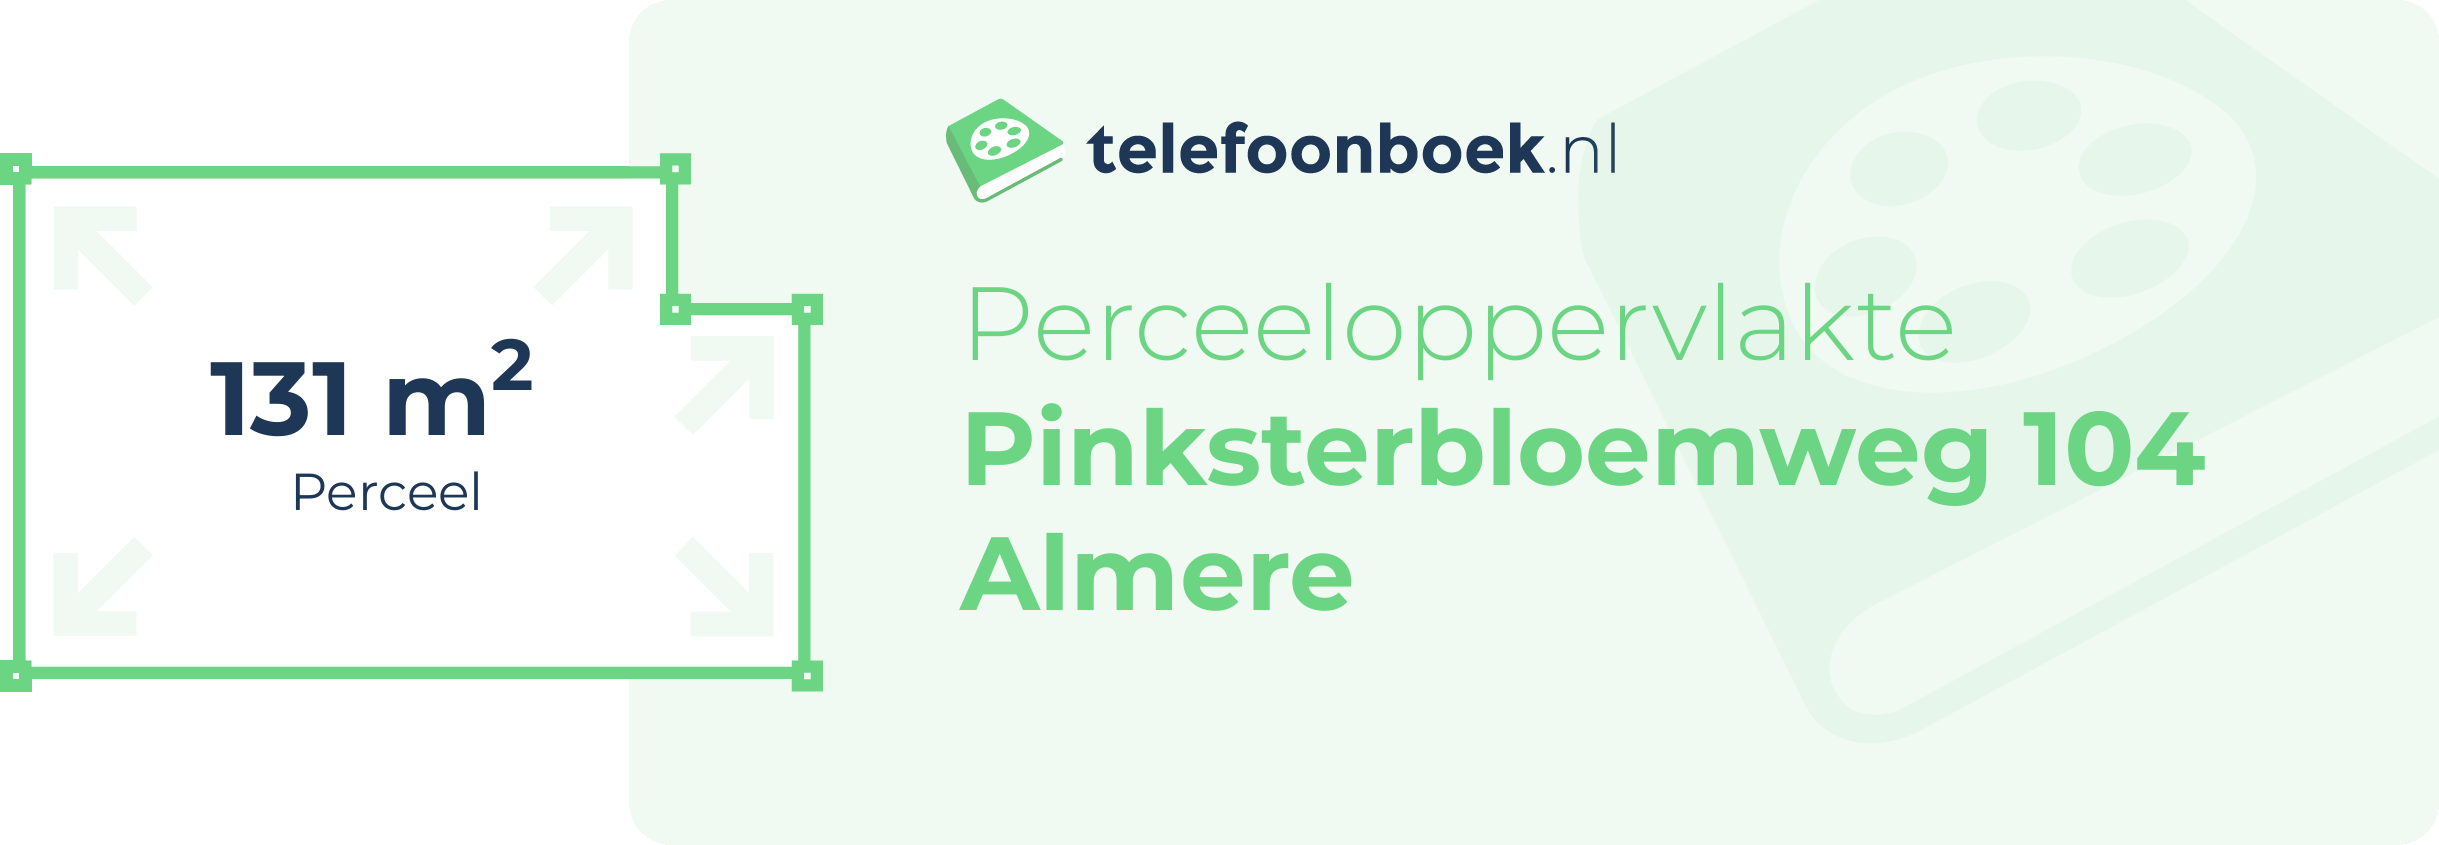 Perceeloppervlakte Pinksterbloemweg 104 Almere